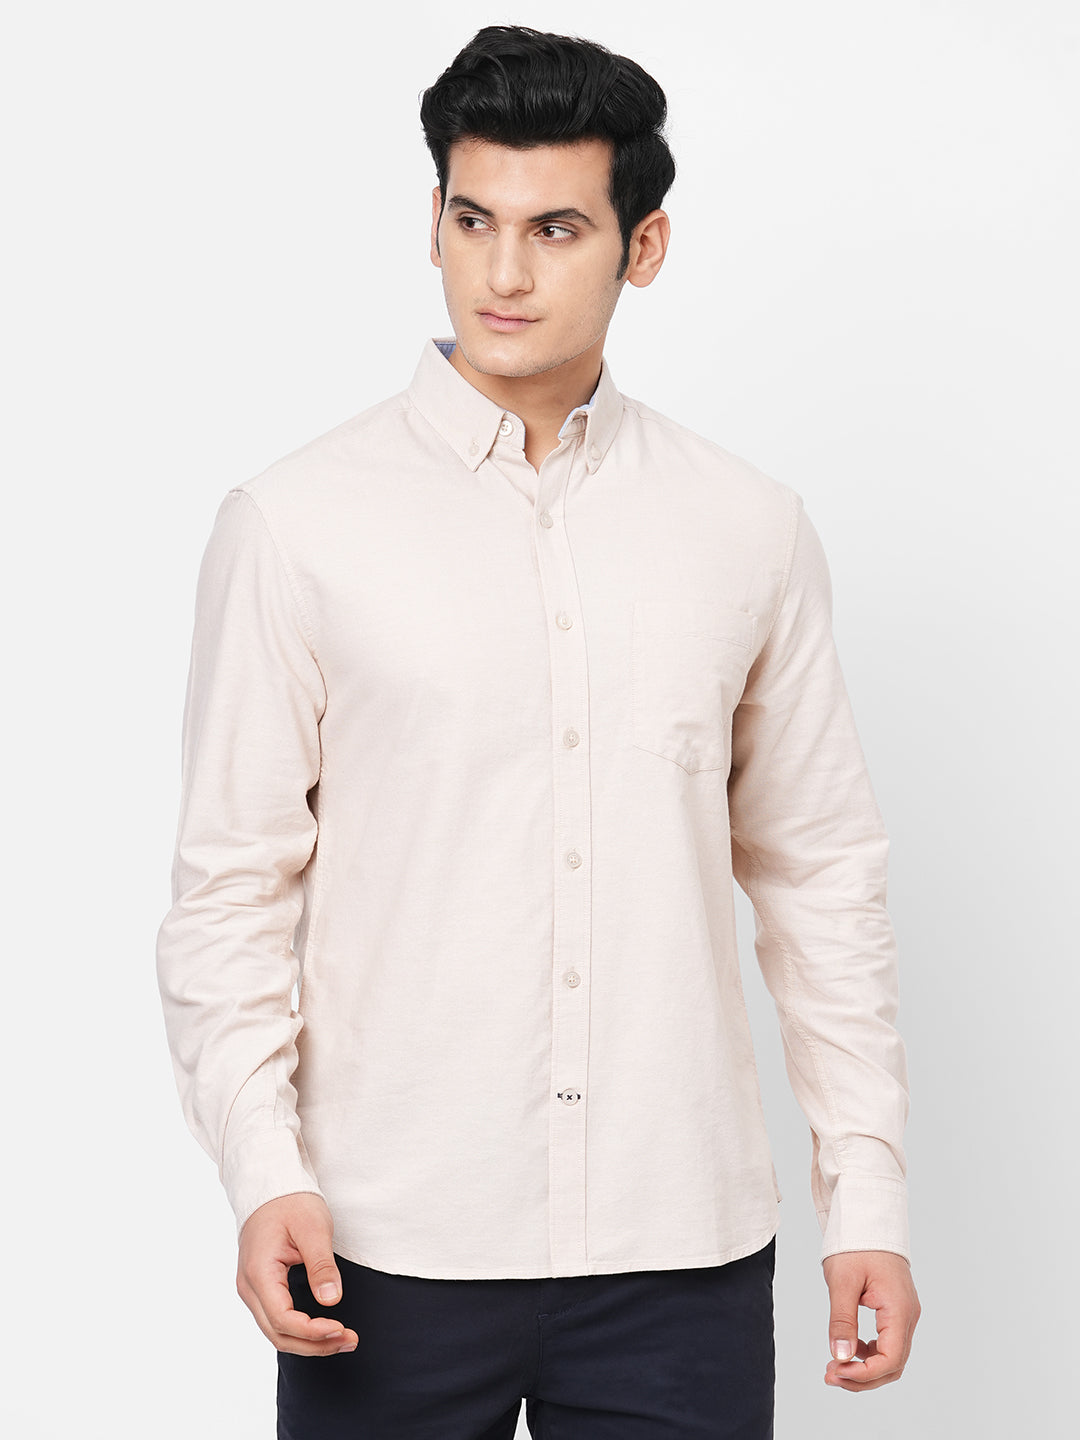 Men's Oxford Cotton Button down Collar Long Sleeved Shirt - Khaki